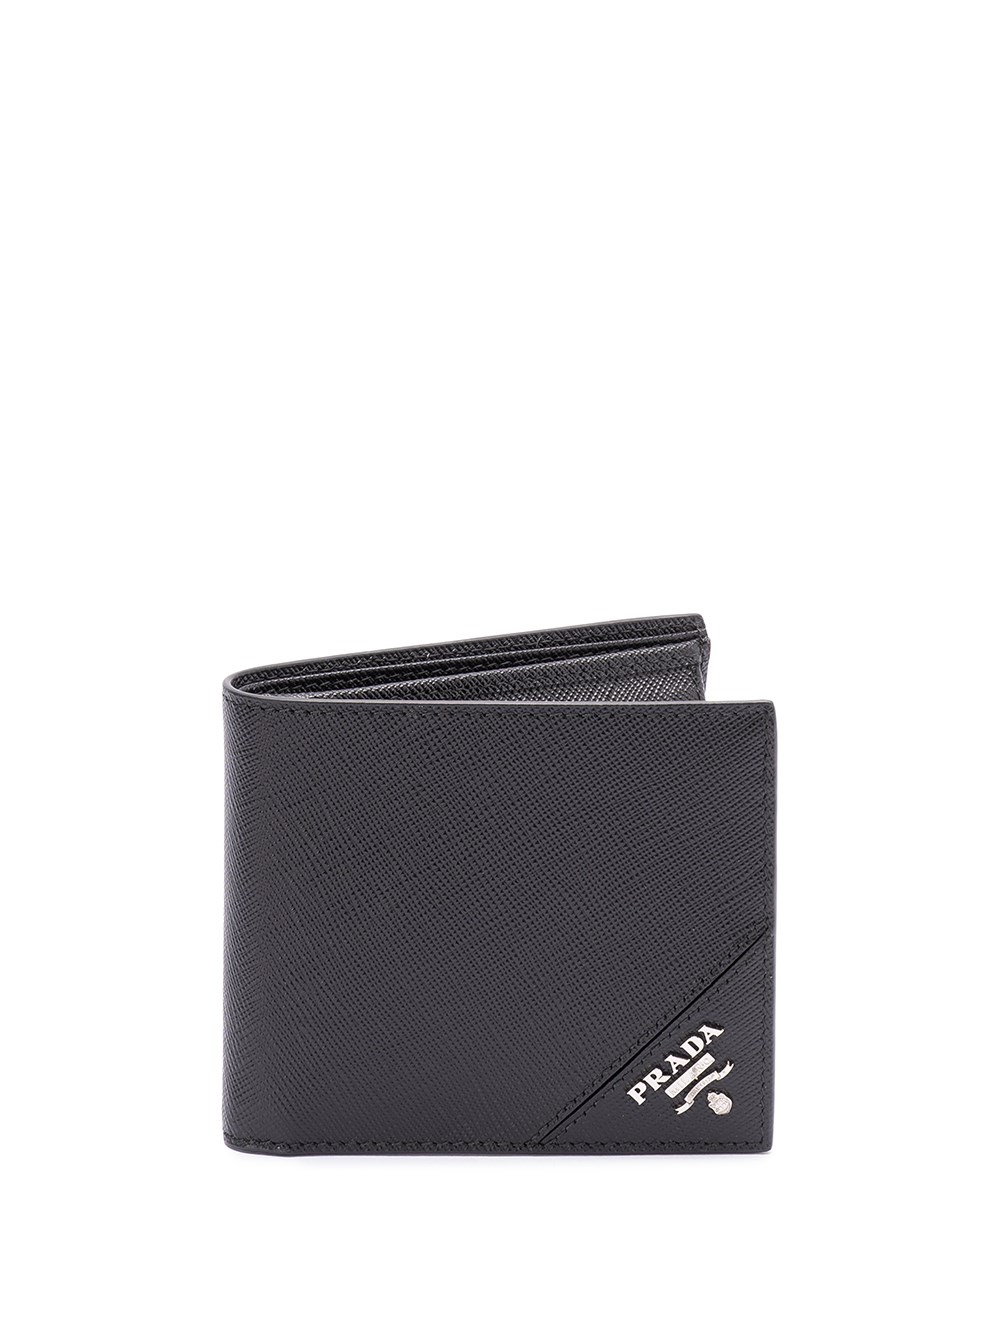 Prada Saffiano Leather Wallet In Black  